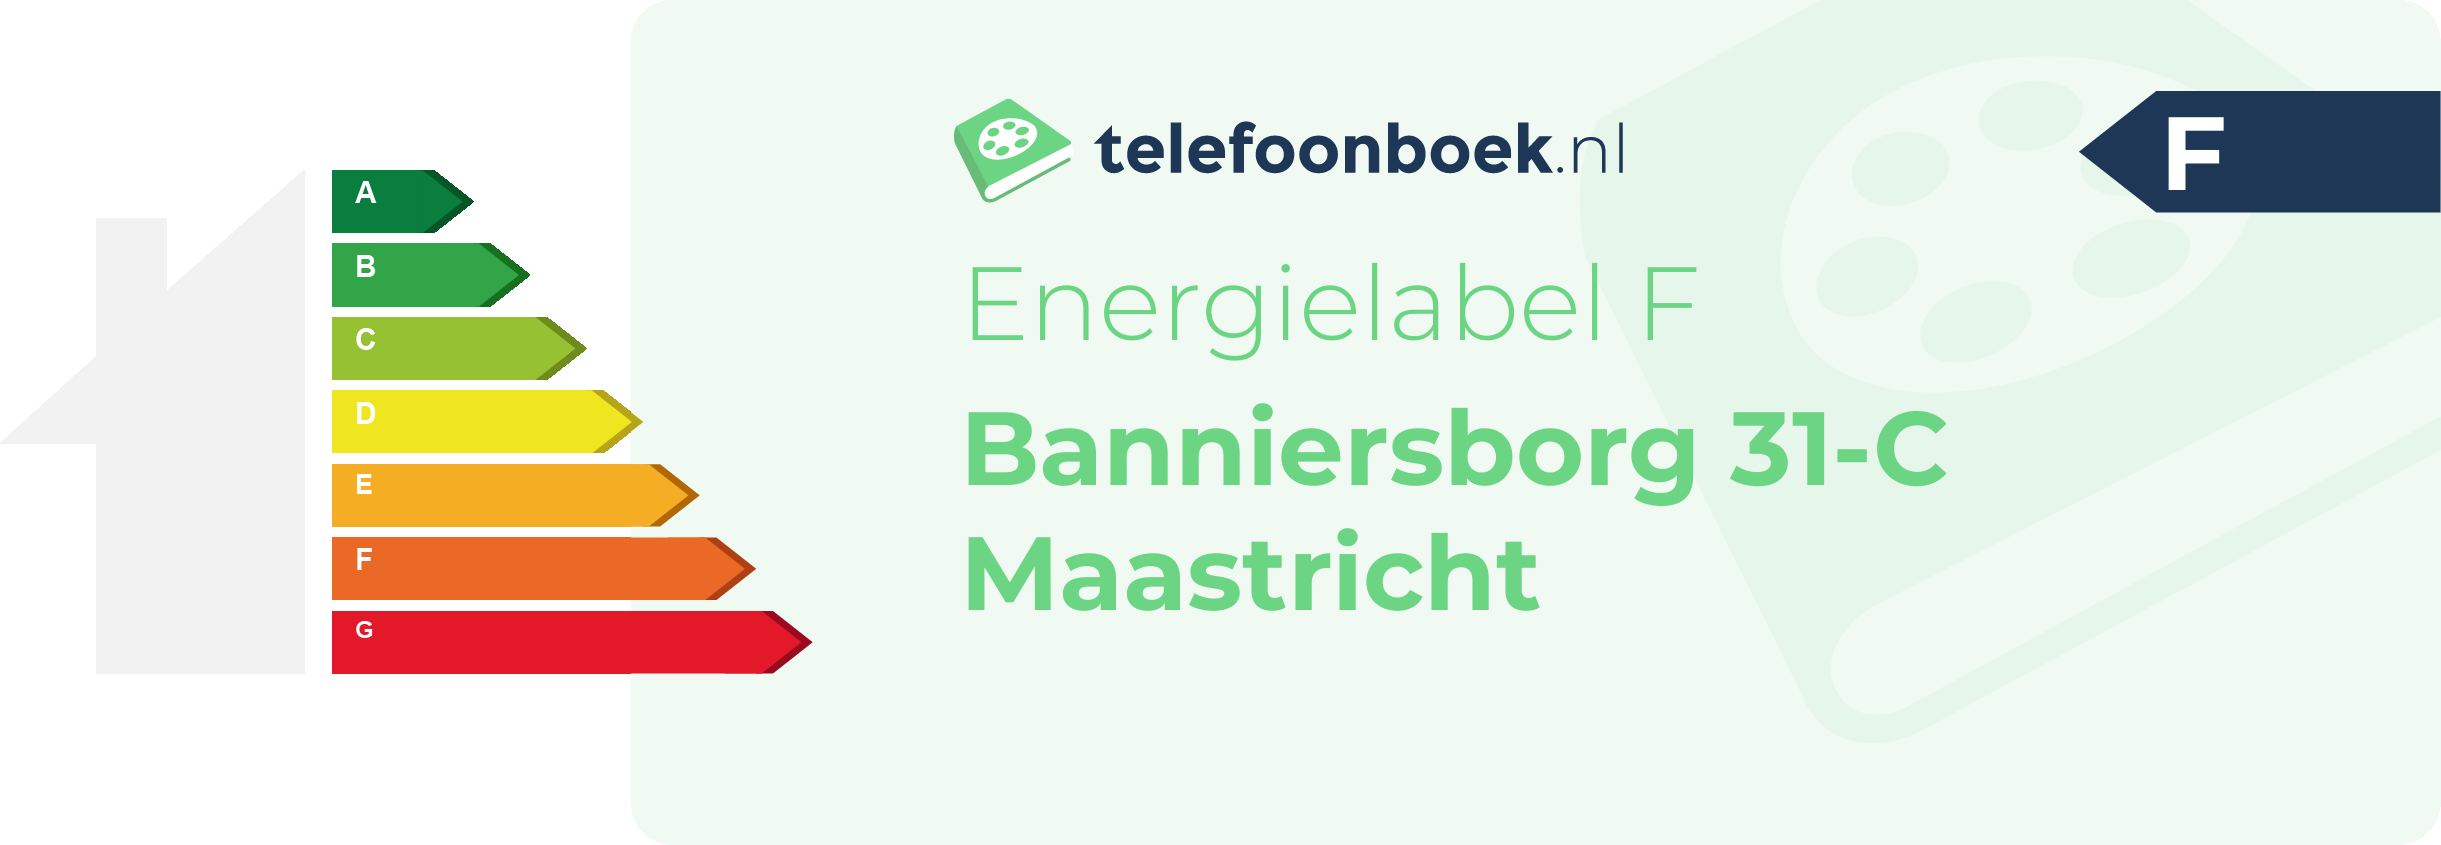 Energielabel Banniersborg 31-C Maastricht